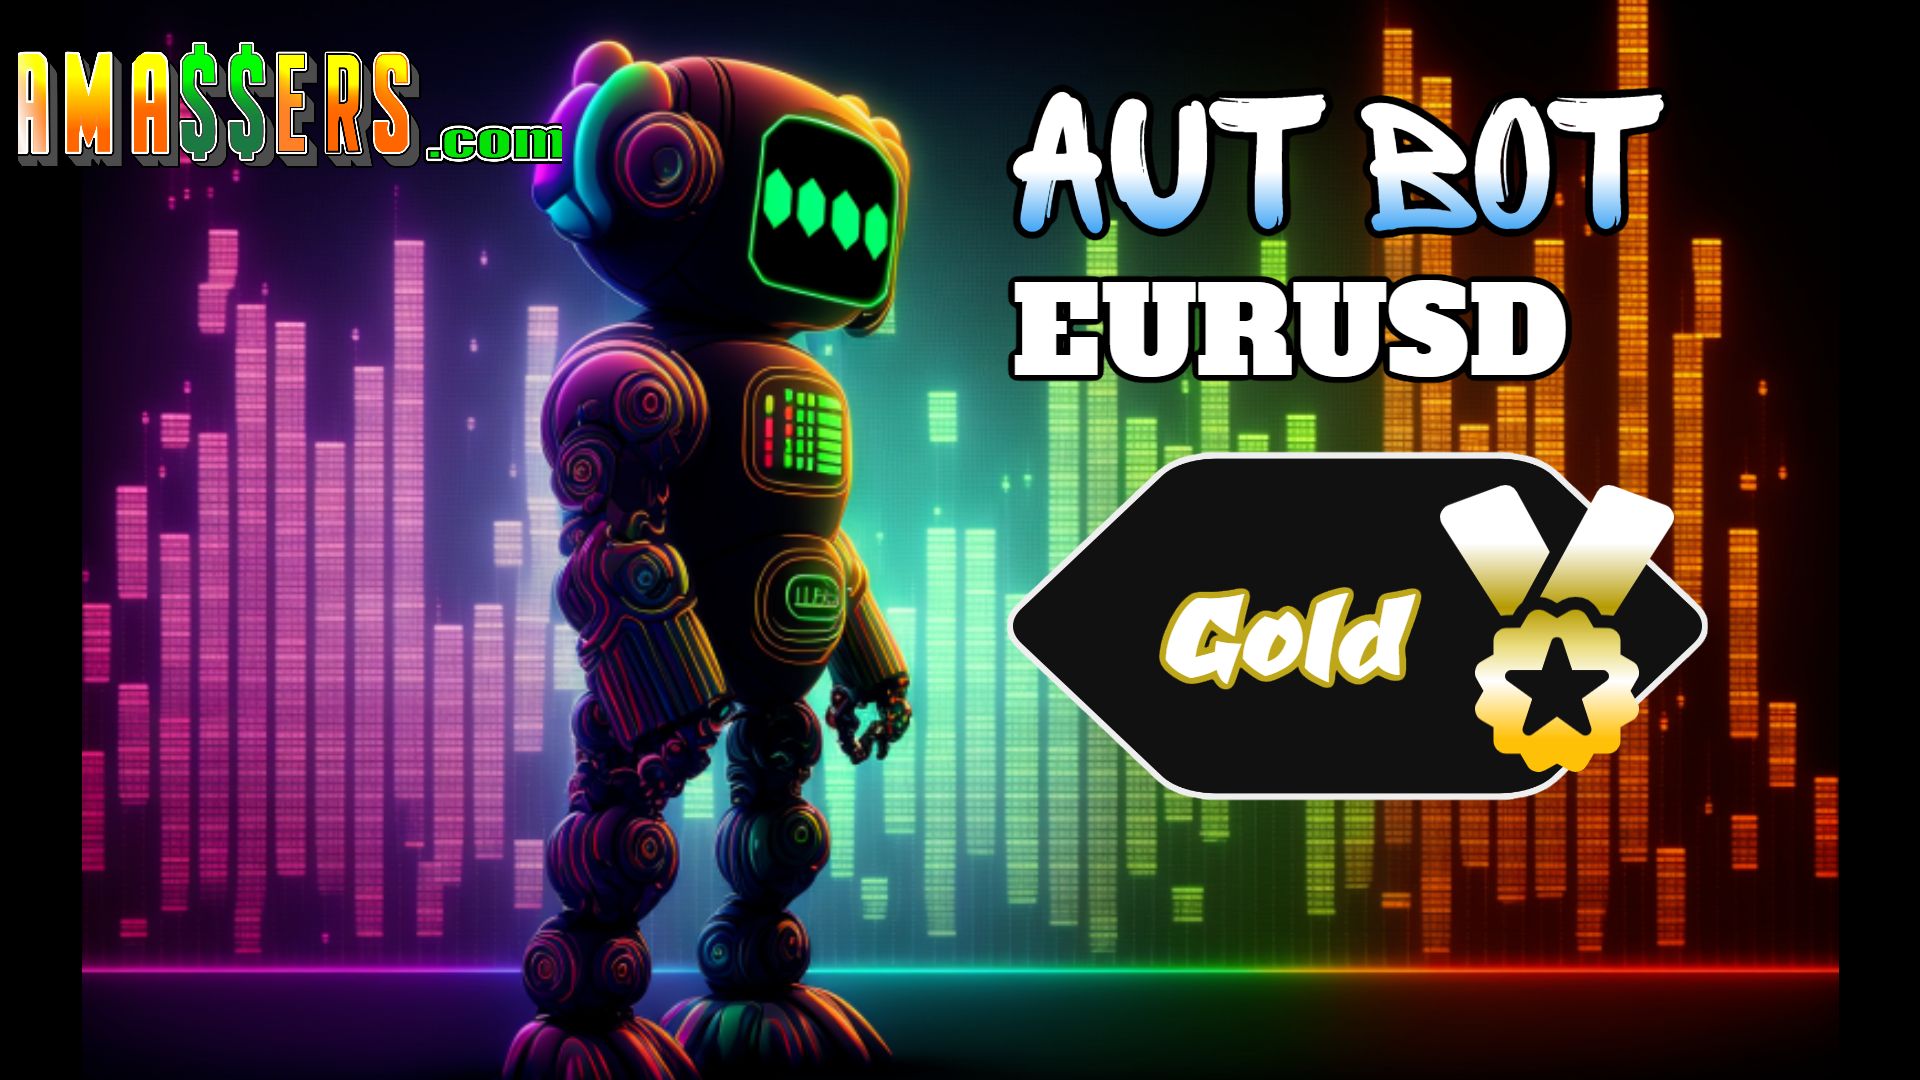 AUT BOT EURUSD GOLD EA 60 days access